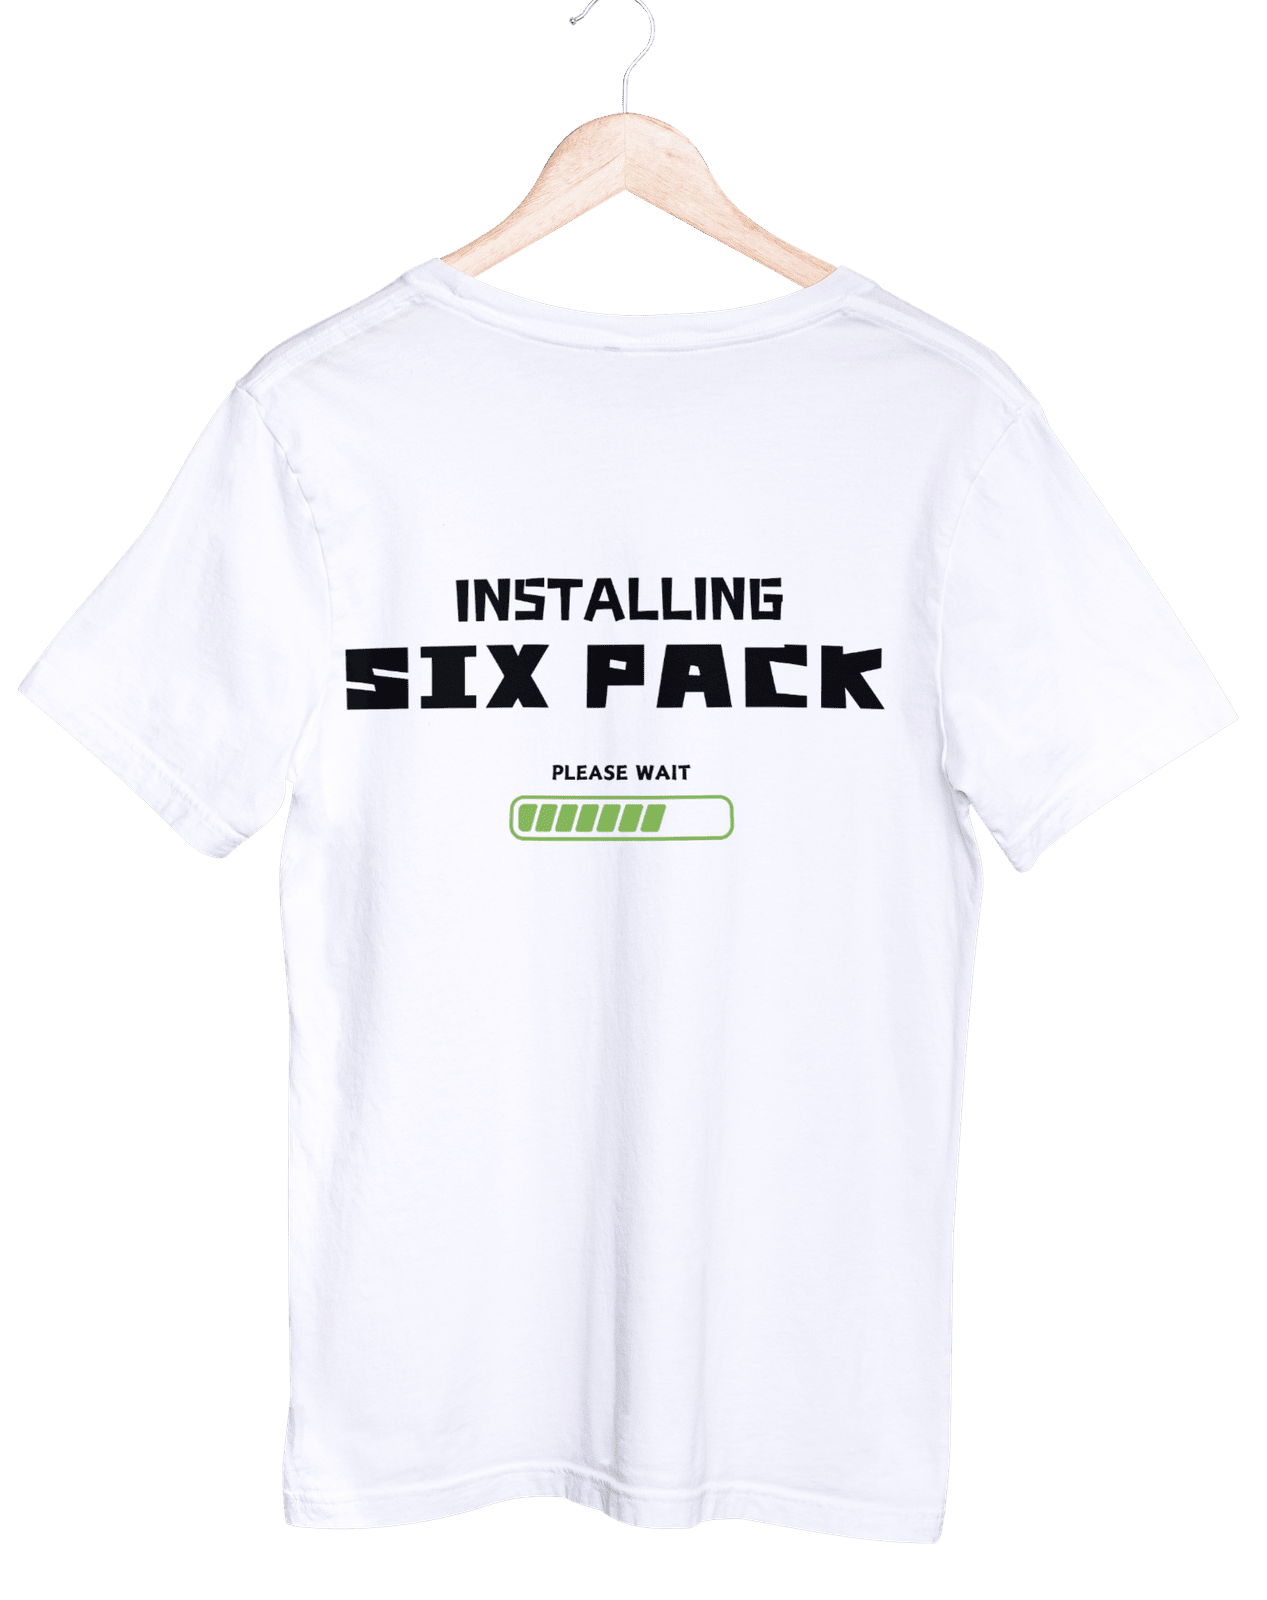 Six Pack Installing (Unisex)